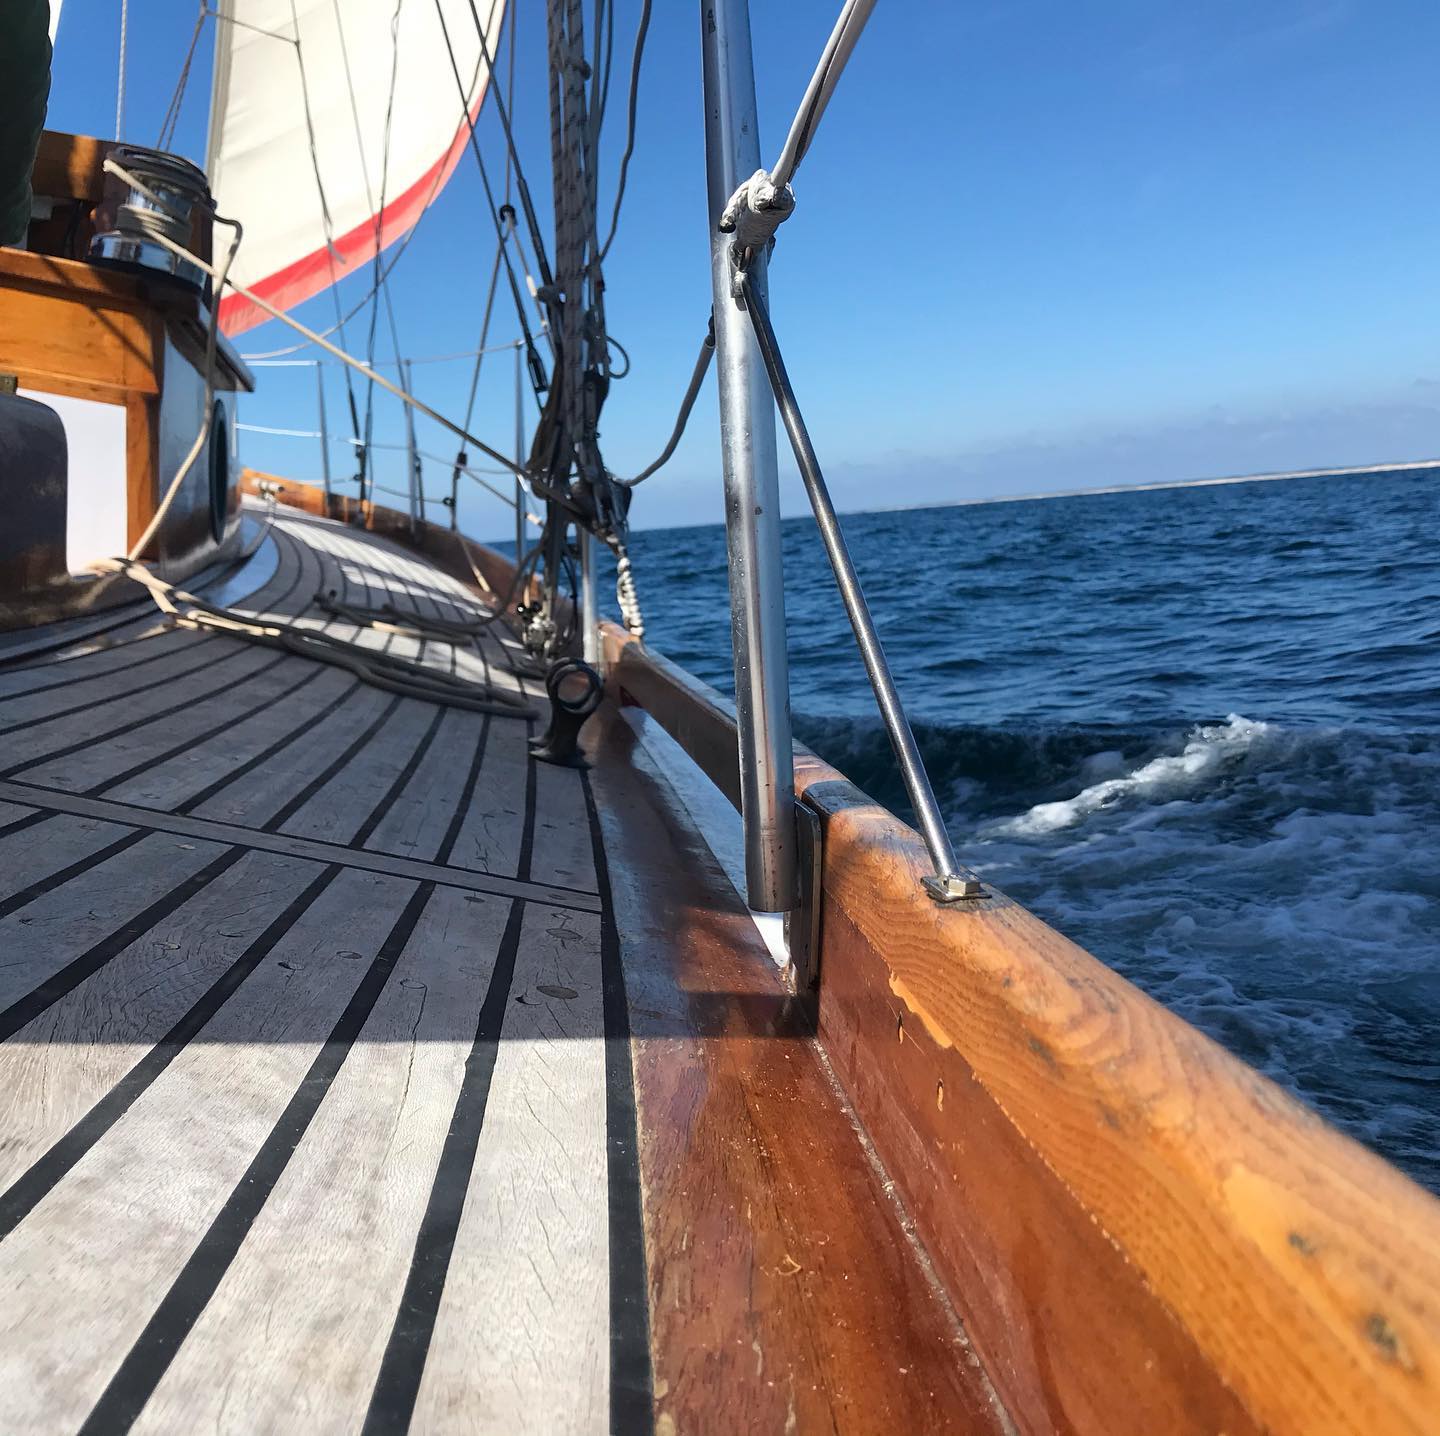 Sailing Hirondelle